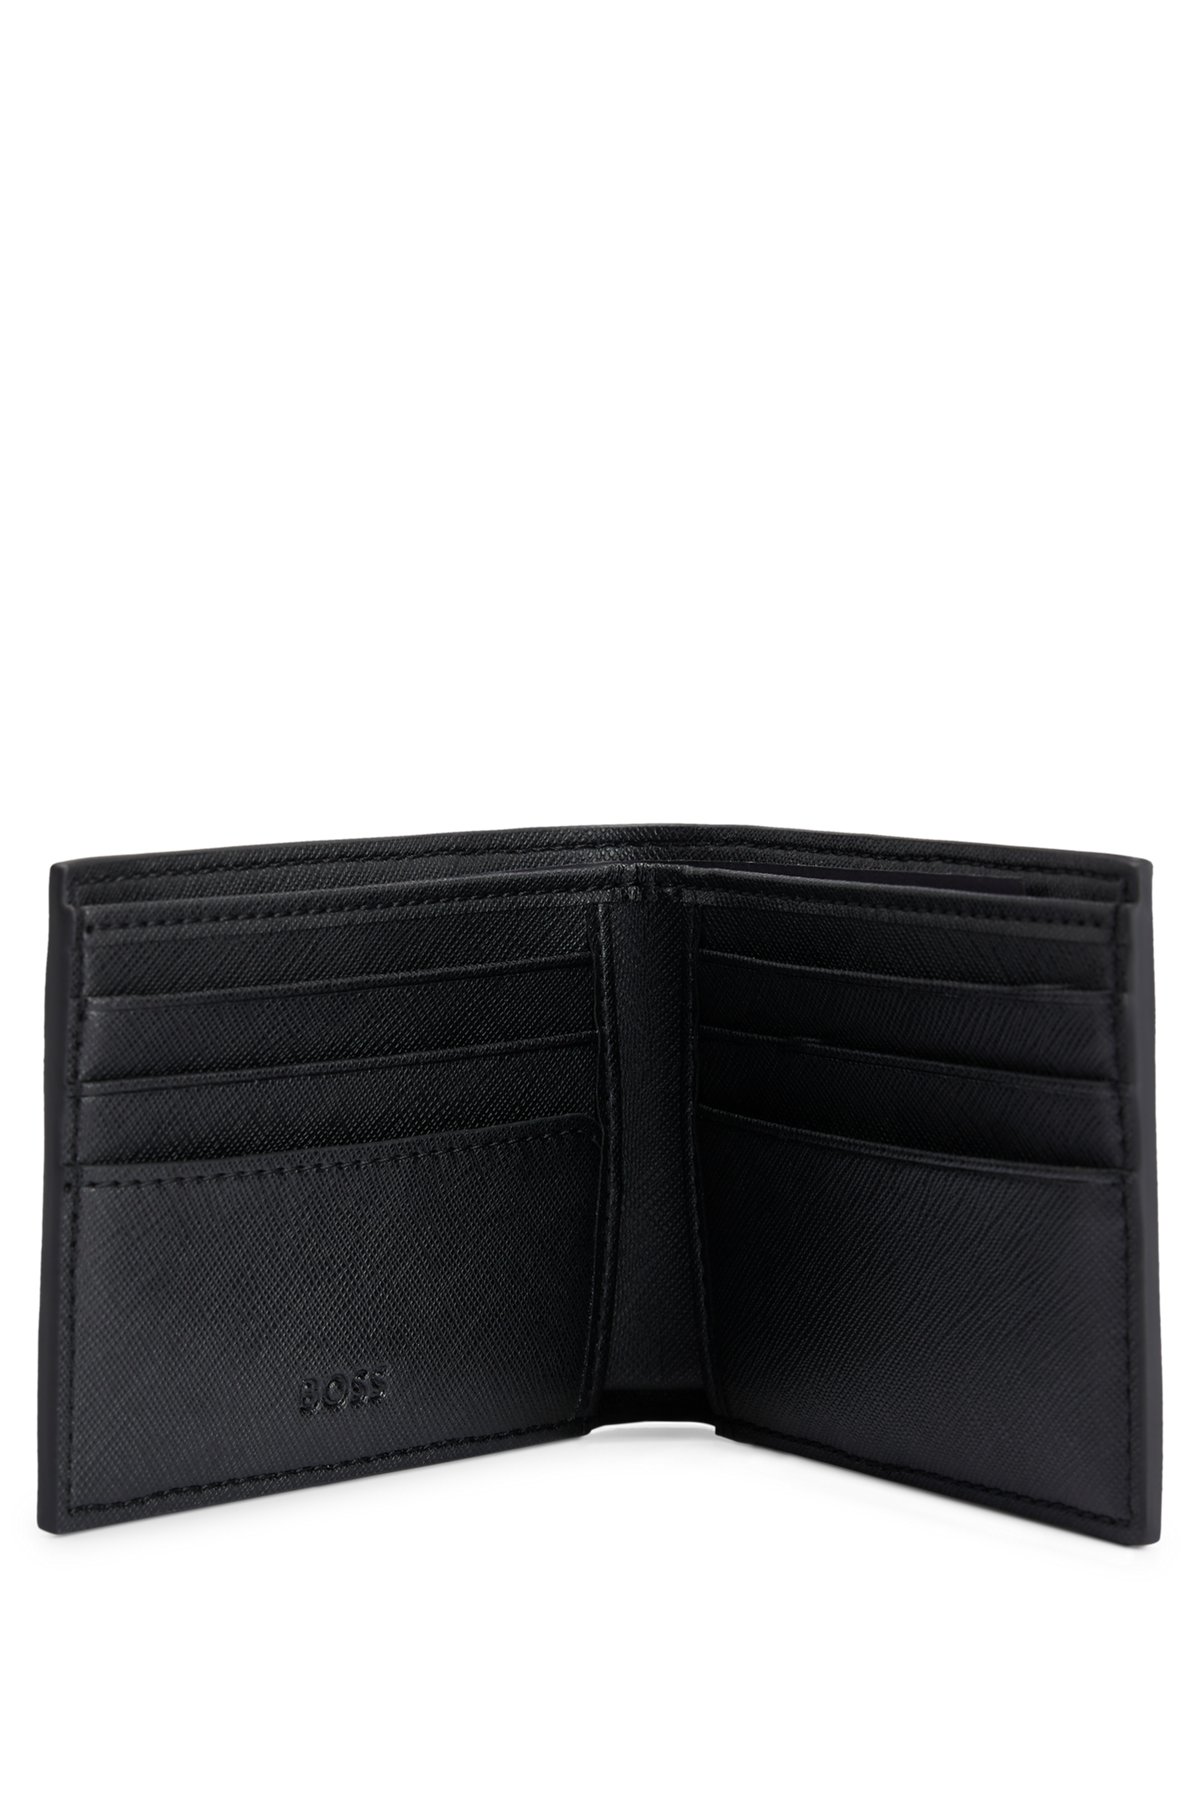 Structured billfold wallet with monogram detailing